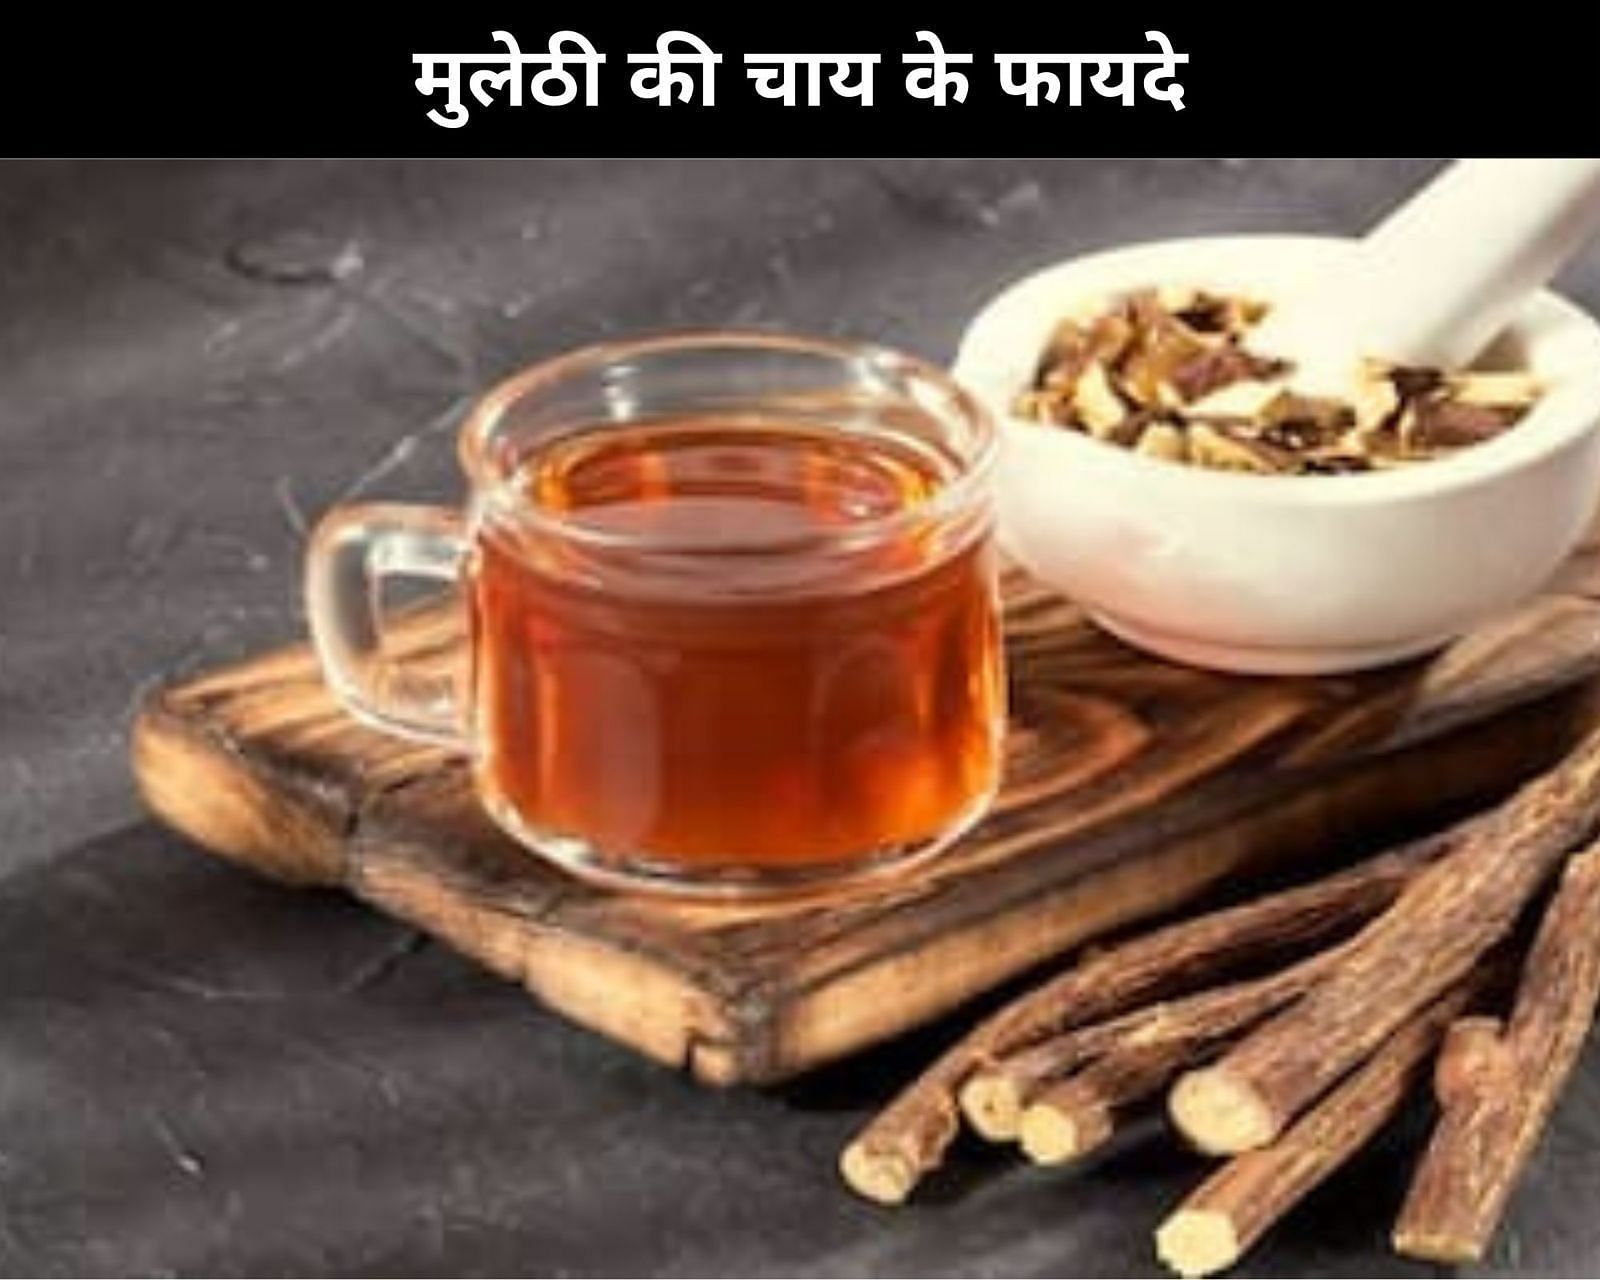 10 Benefits Of Licorice Tea In Hindi: मुलेठी की चाय के 10 फायदे